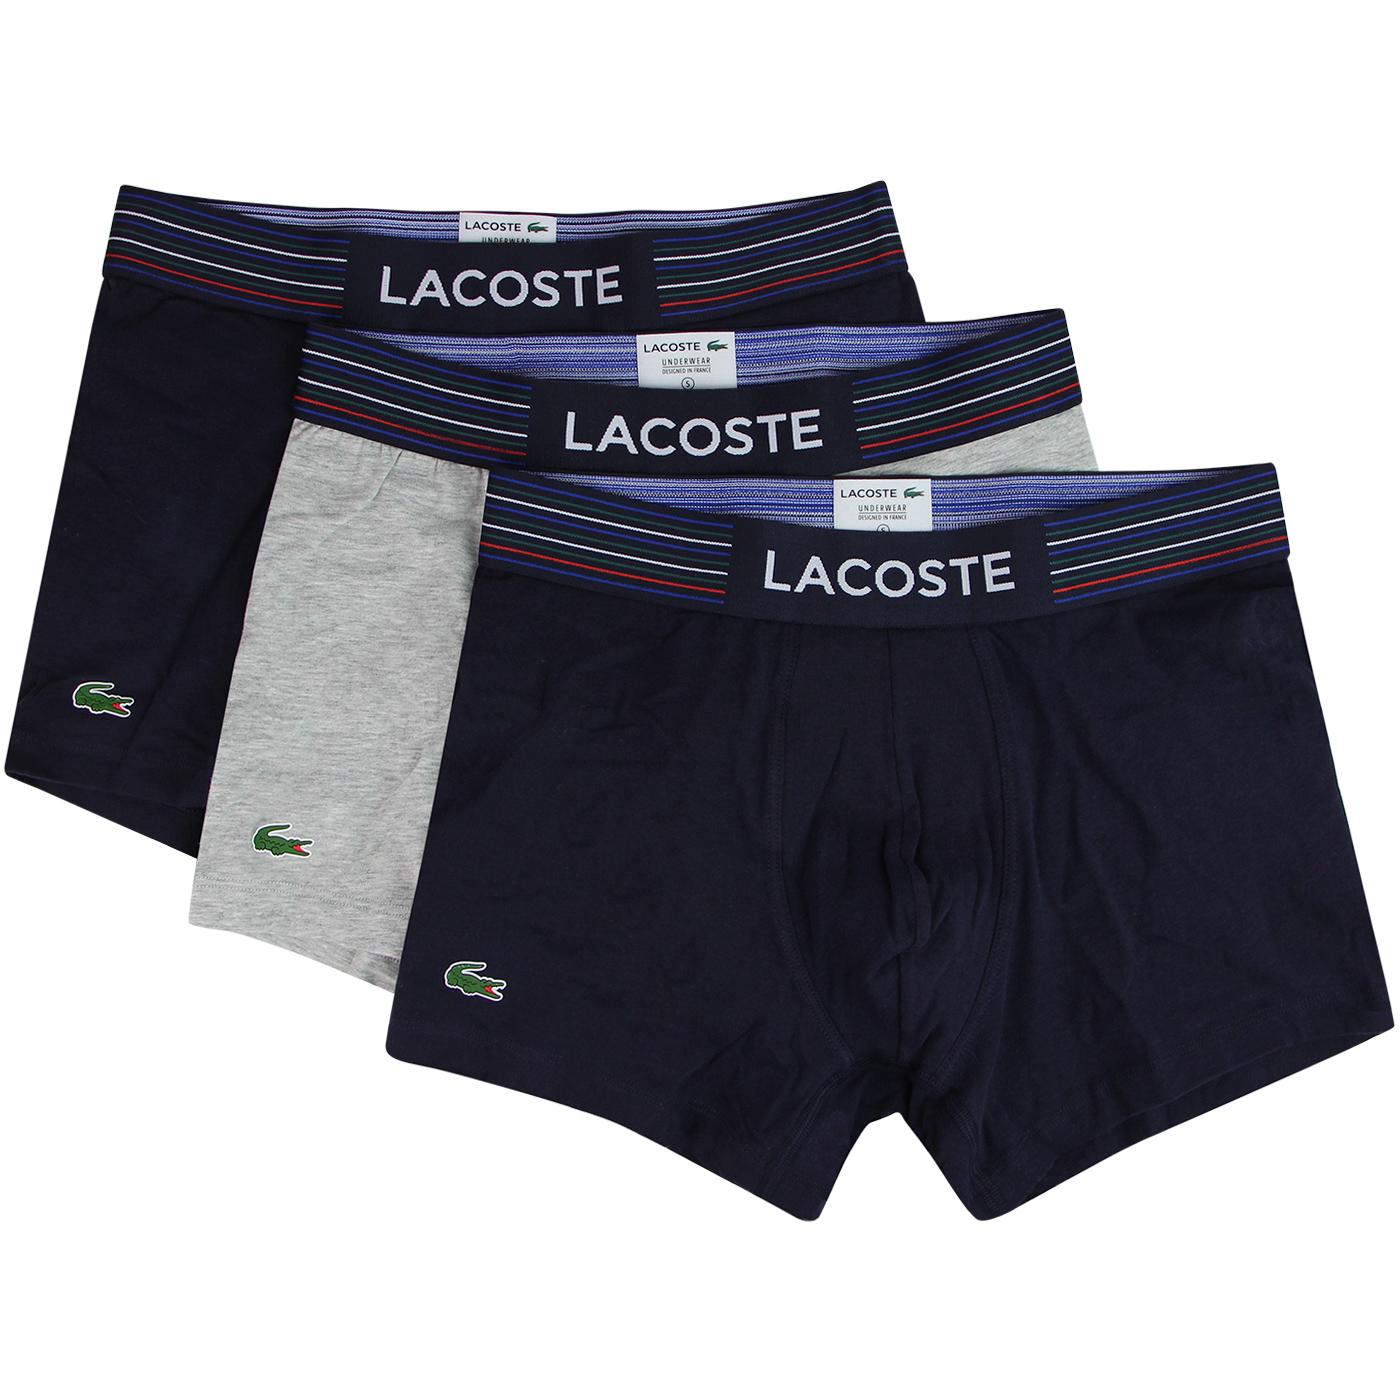 + LACOSTE Men's Multi stripe 3 Pack Trunks Grey/Navy